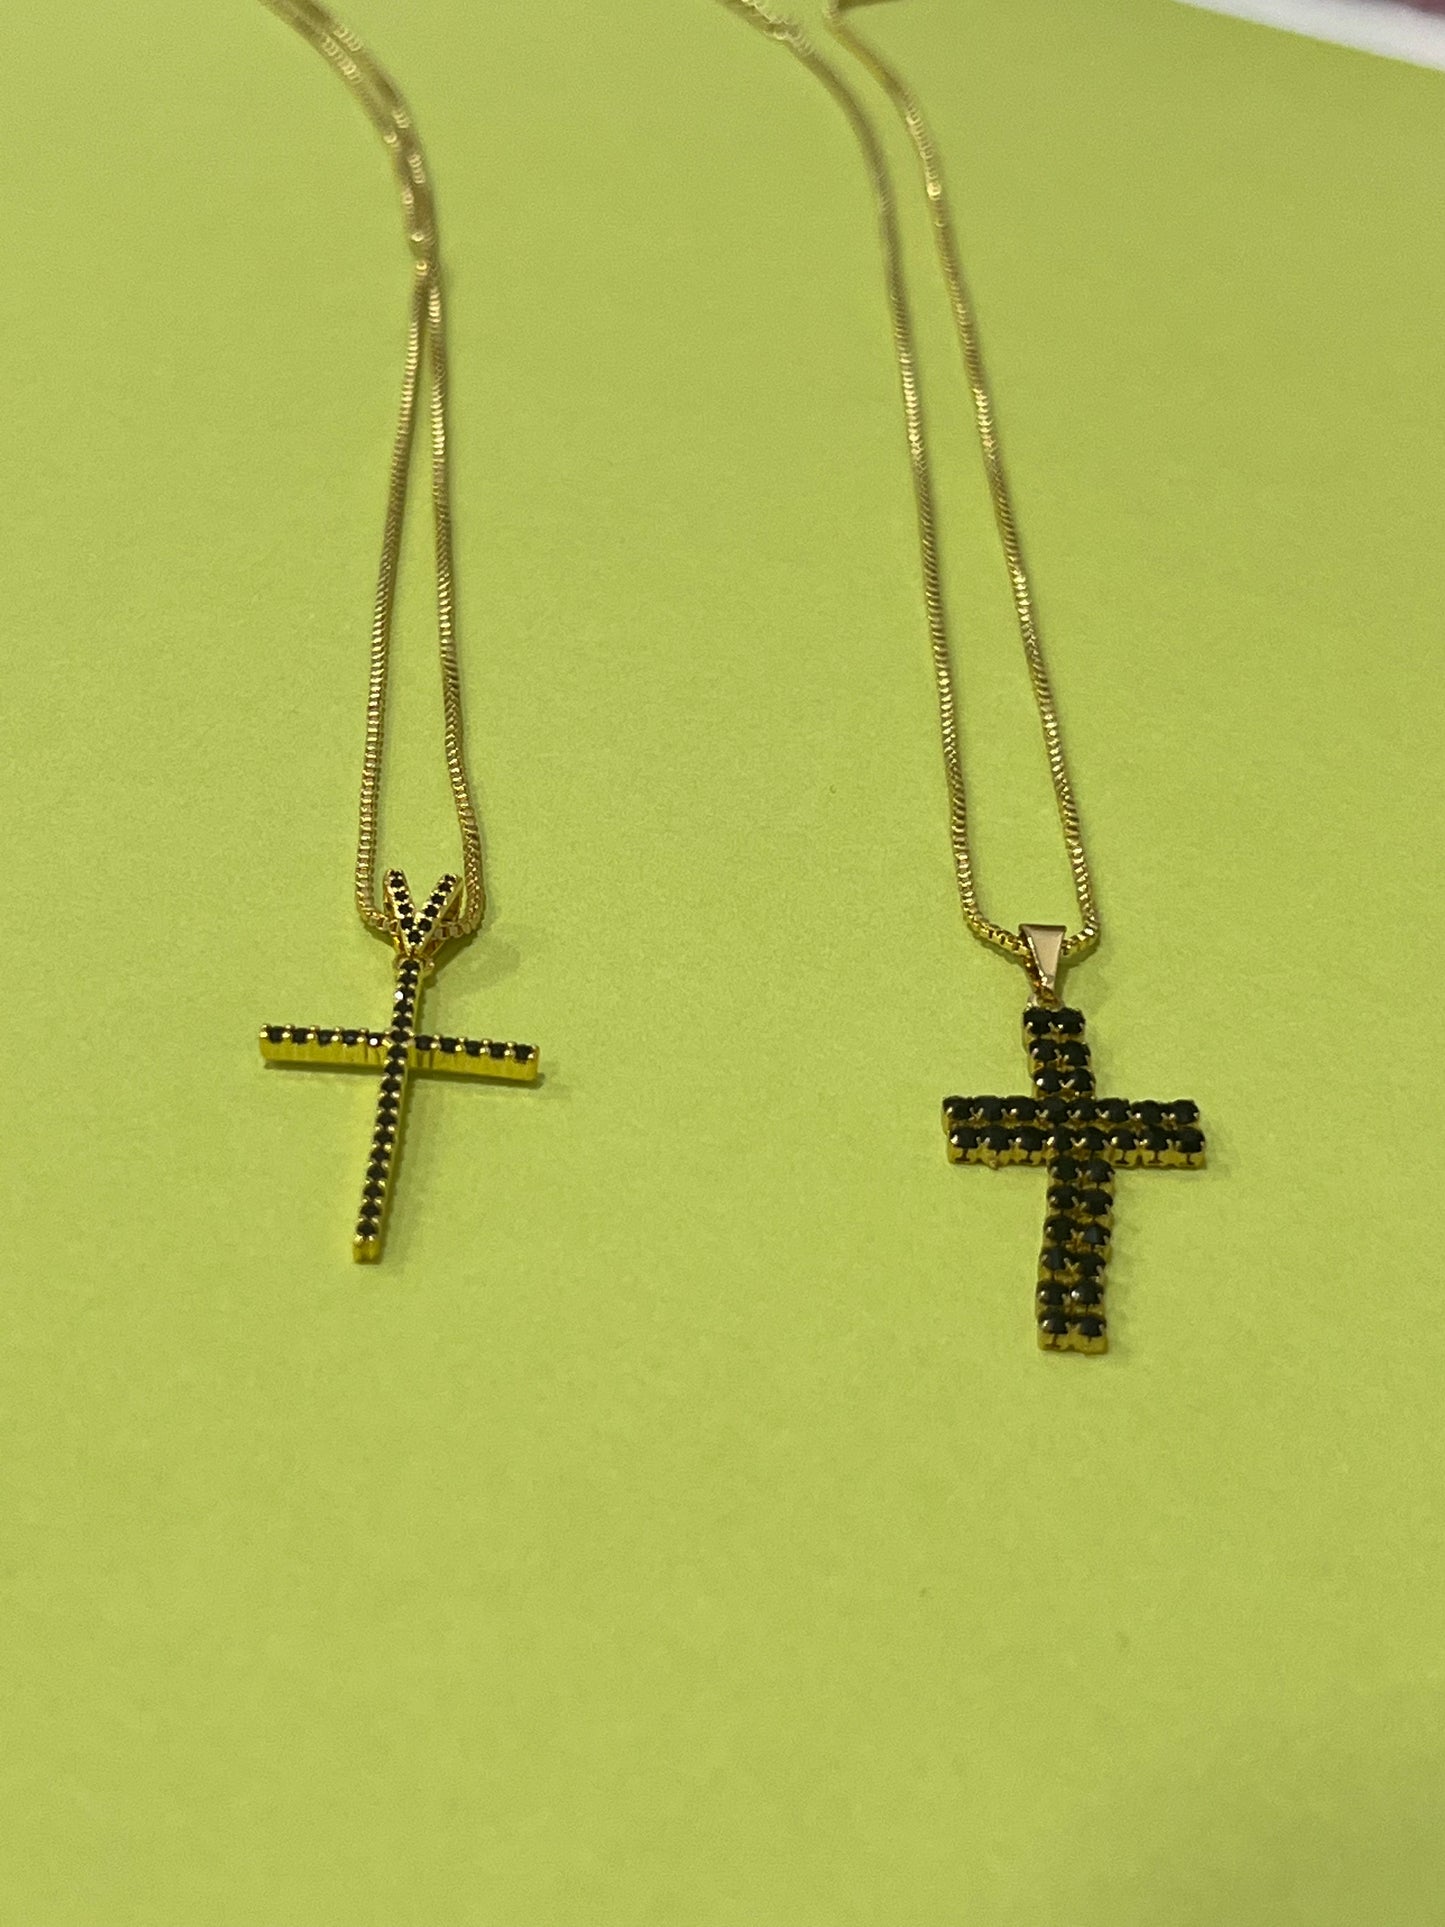 Rhinestone Classy Cross Necklace